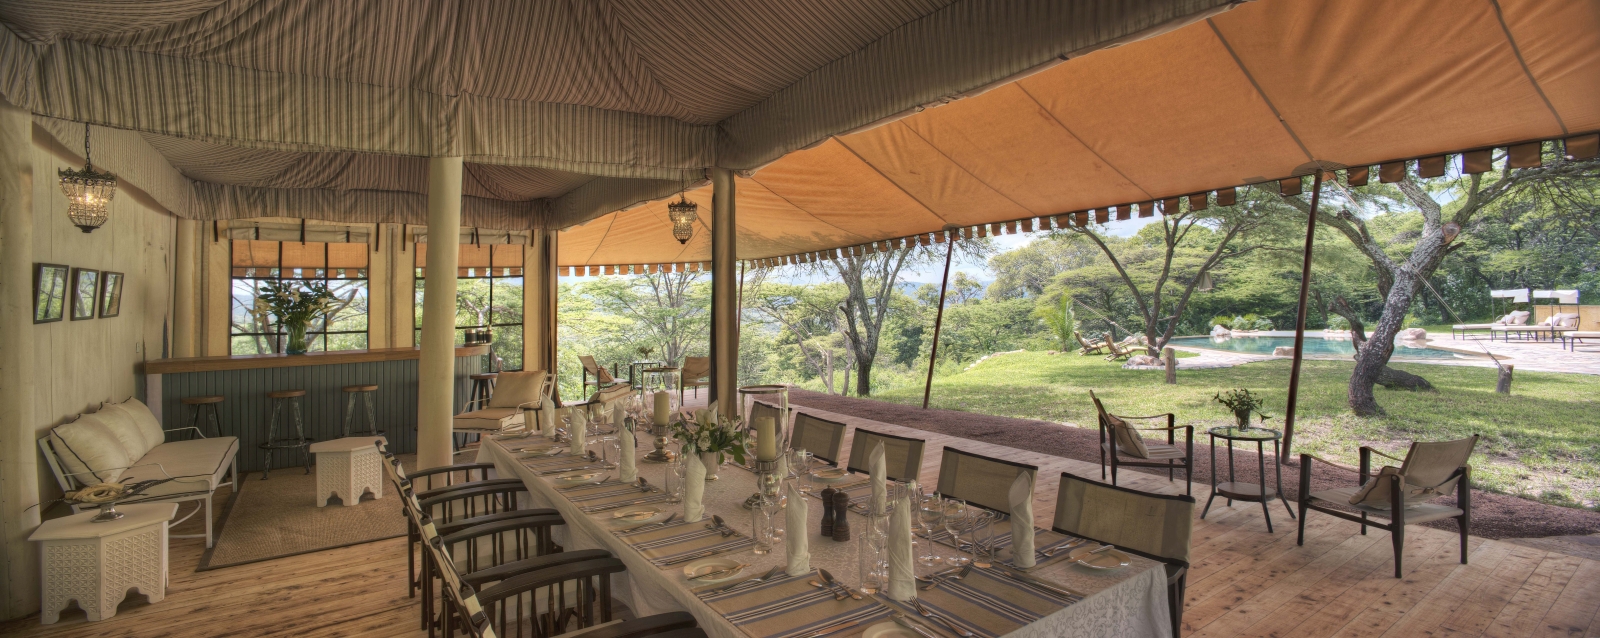 Pool-side dining and bar at luxury safari lodge Cottar's 1920's Safari Camp in the Maasai Mara, Kenya